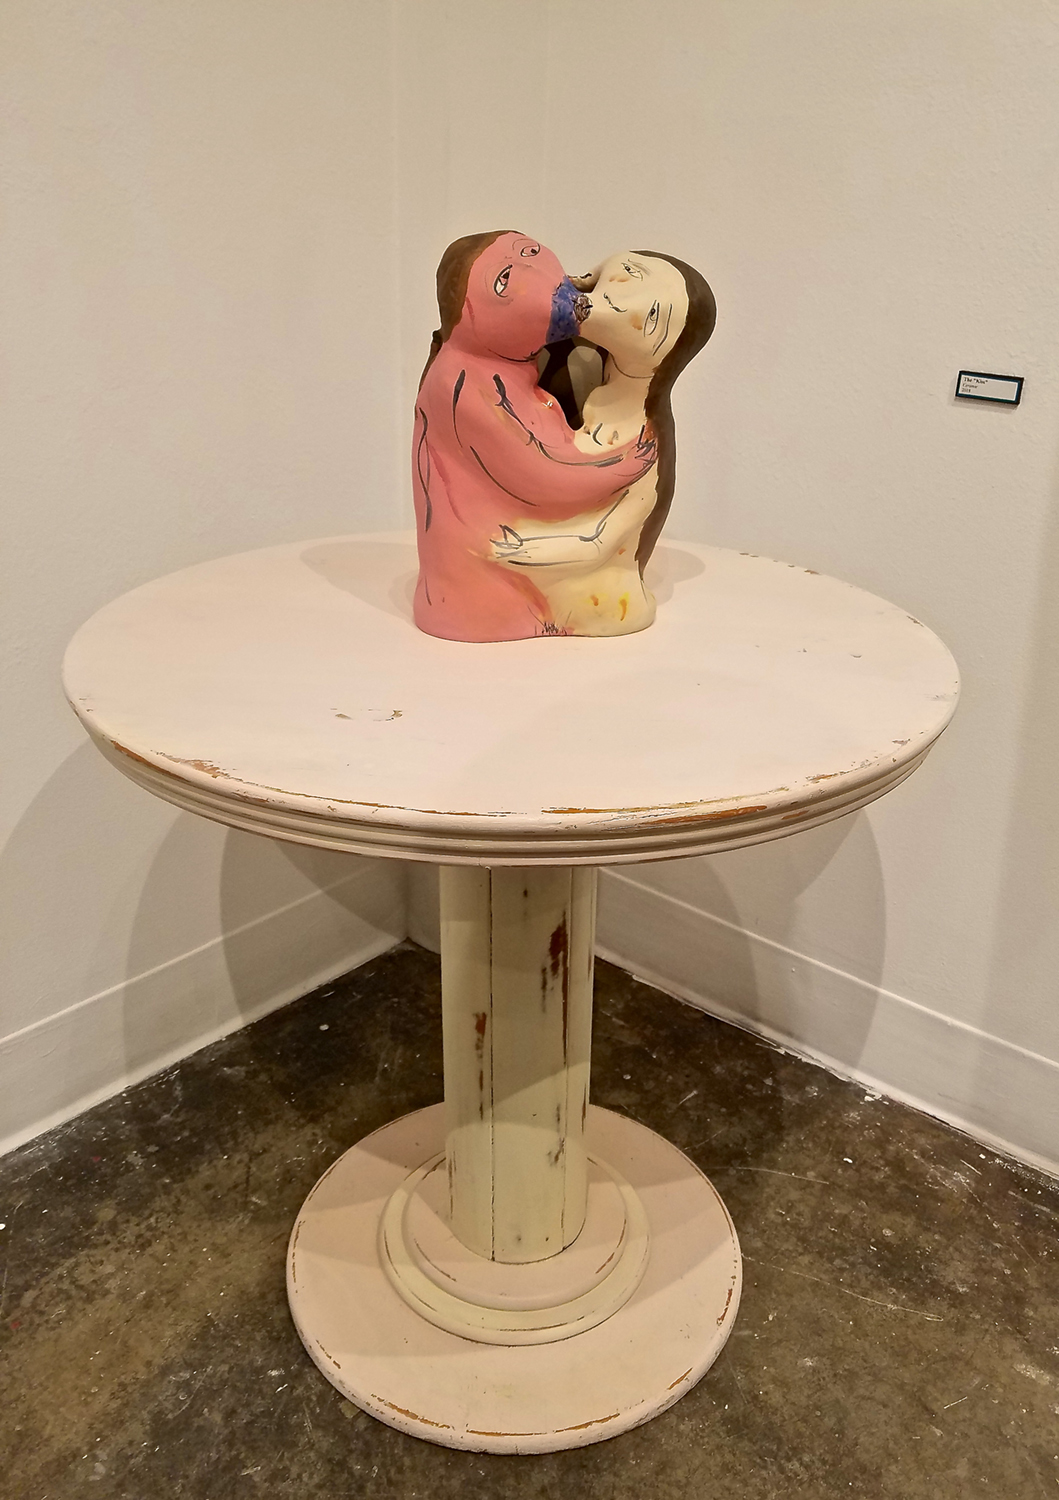 Ceramic statue of two figures kissing. Image courtesy of Olena Ellis